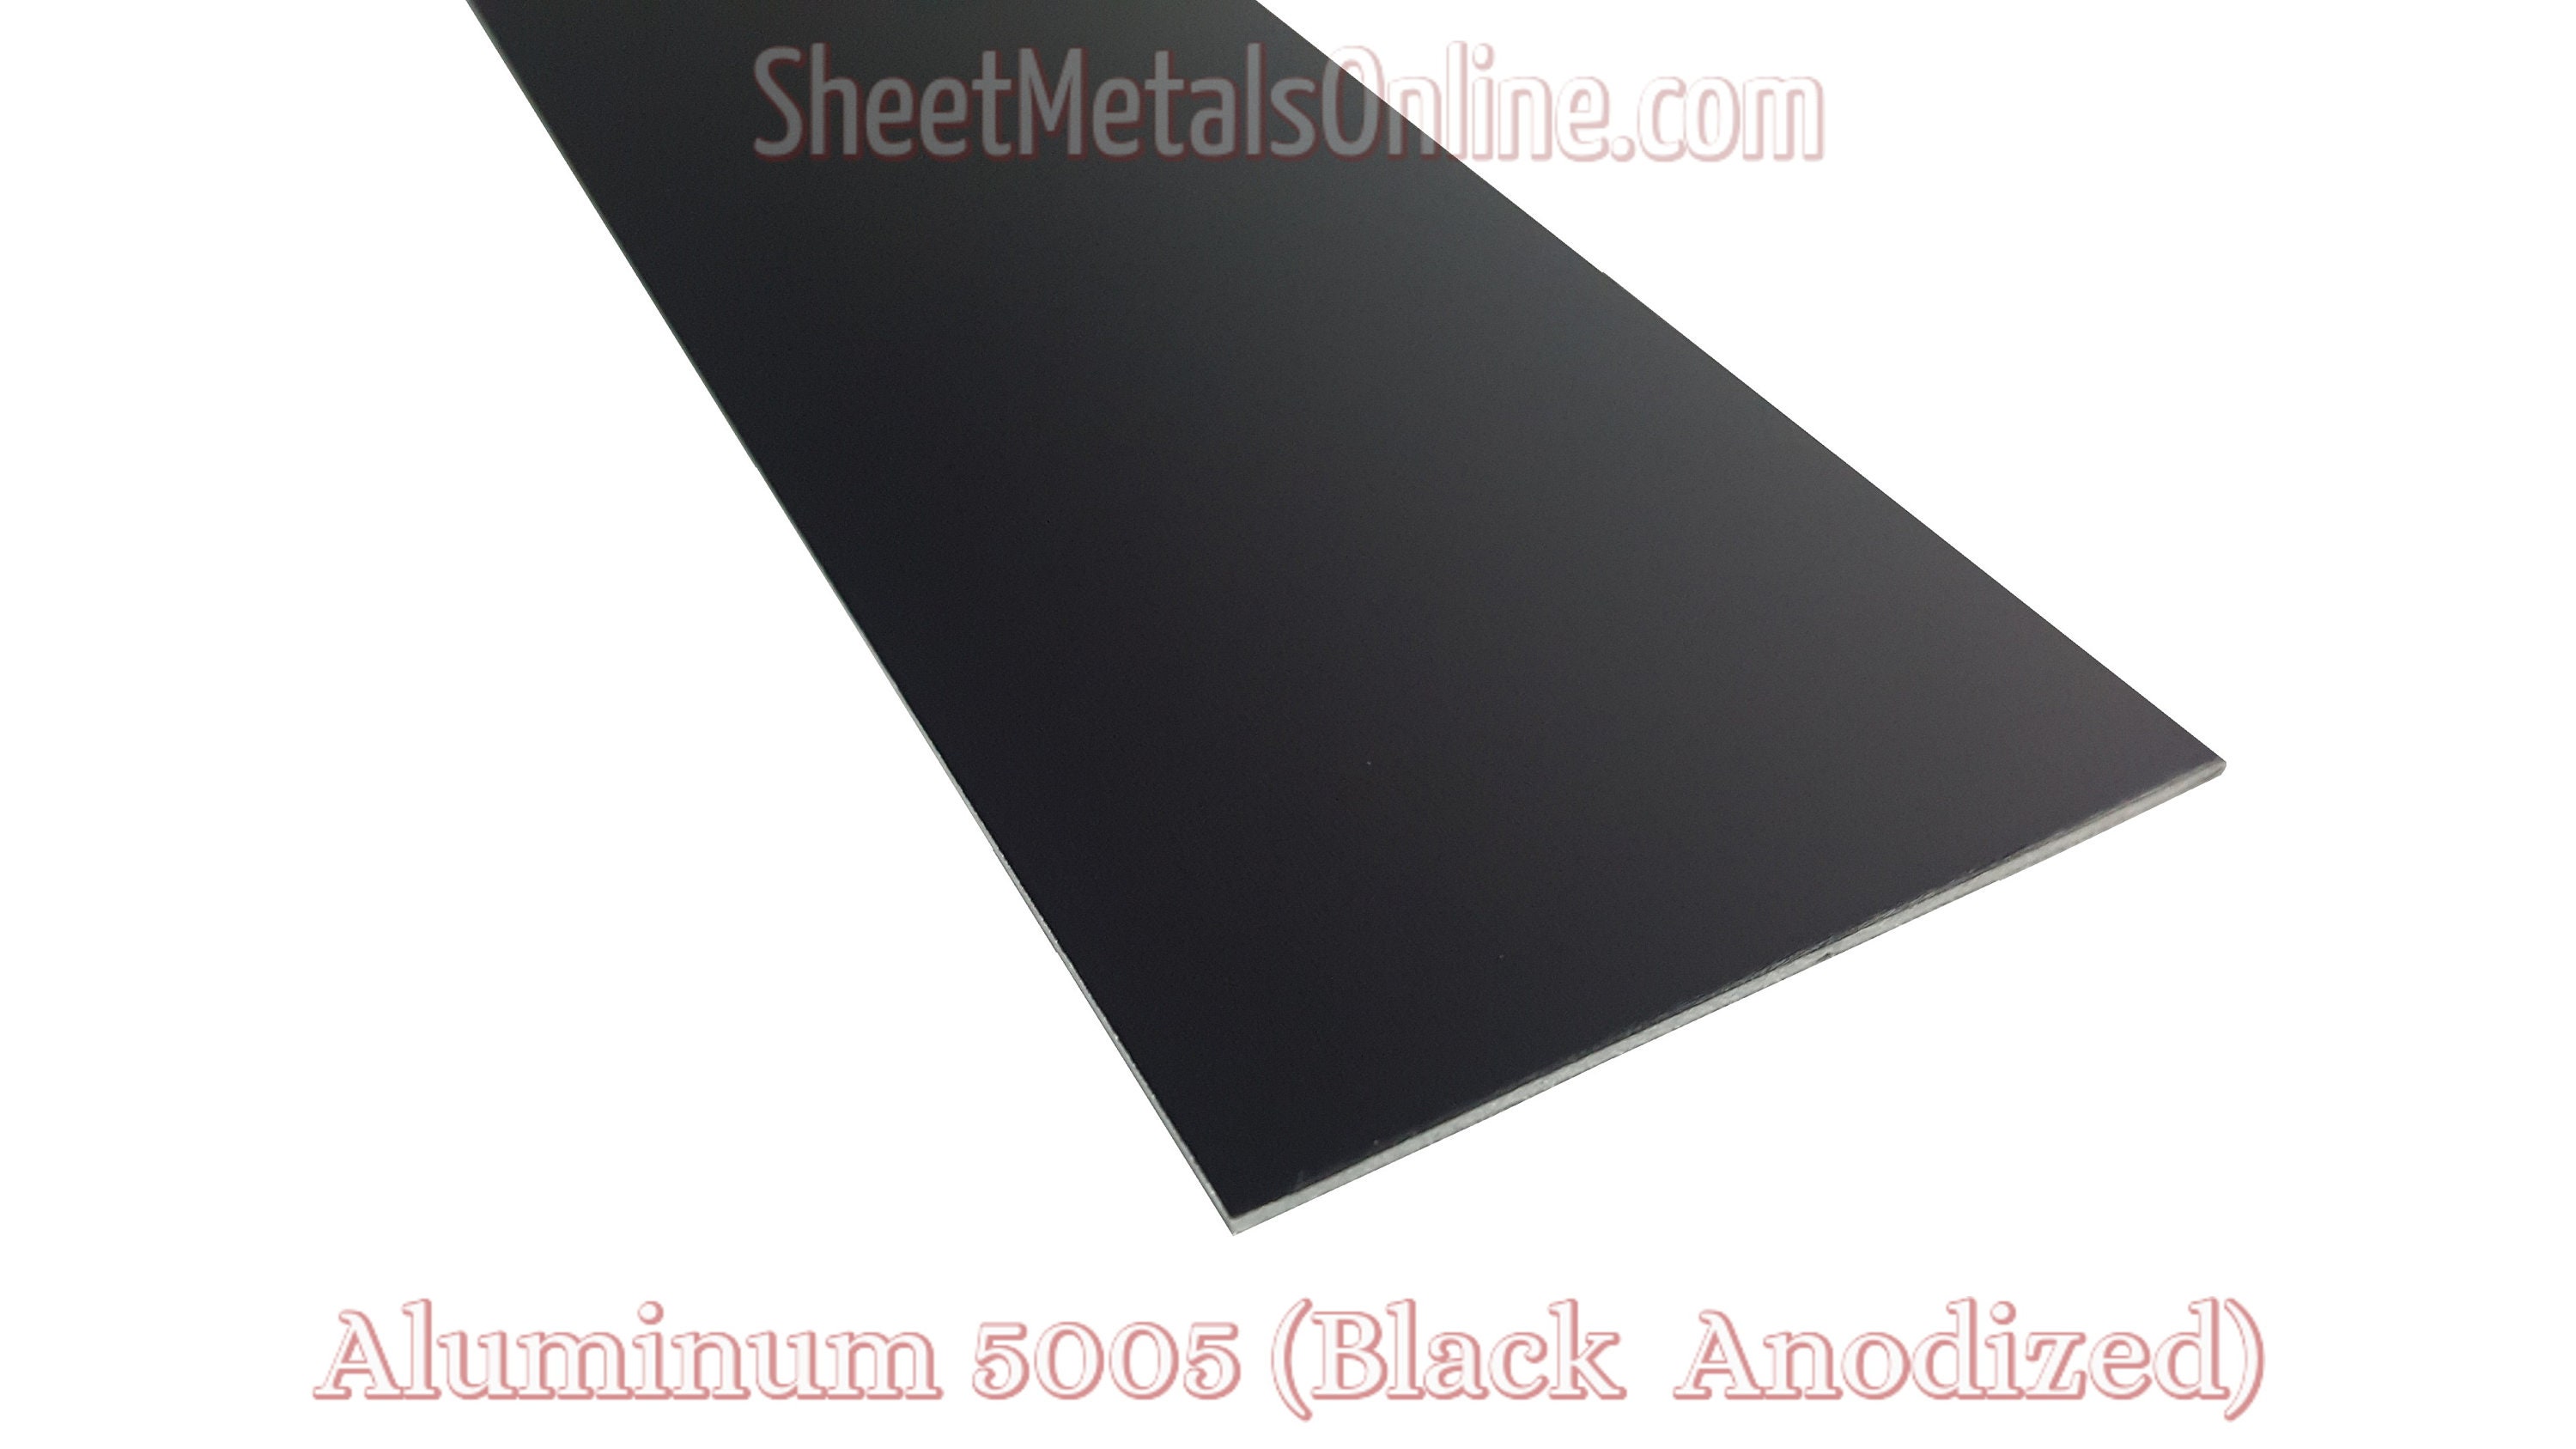 Placa de chapa metálica de aluminio anodizado negro 0.080 12 x 36